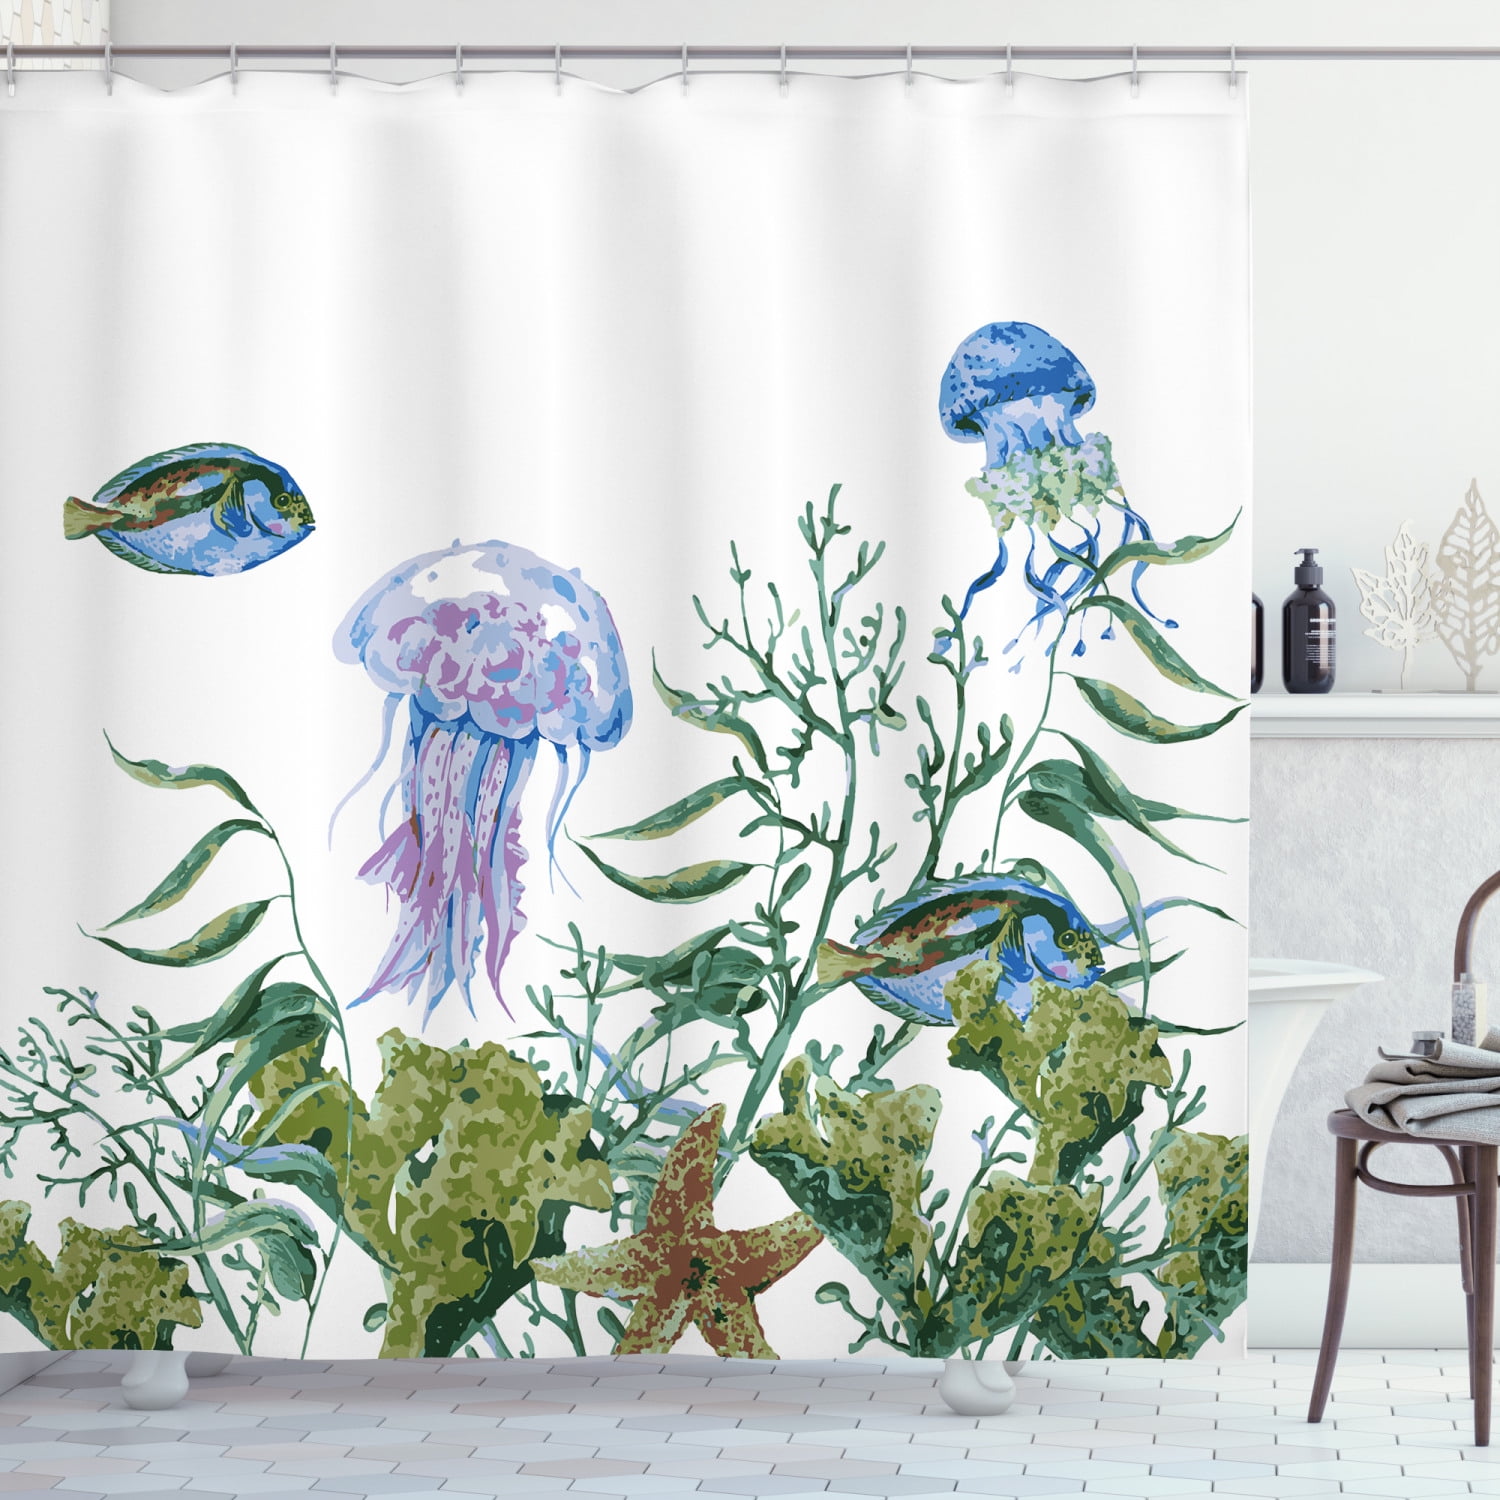 Mermaid and Jellyfish Shower Curtain Bathroom Decor Fabric & 12hooks 71*71inches 